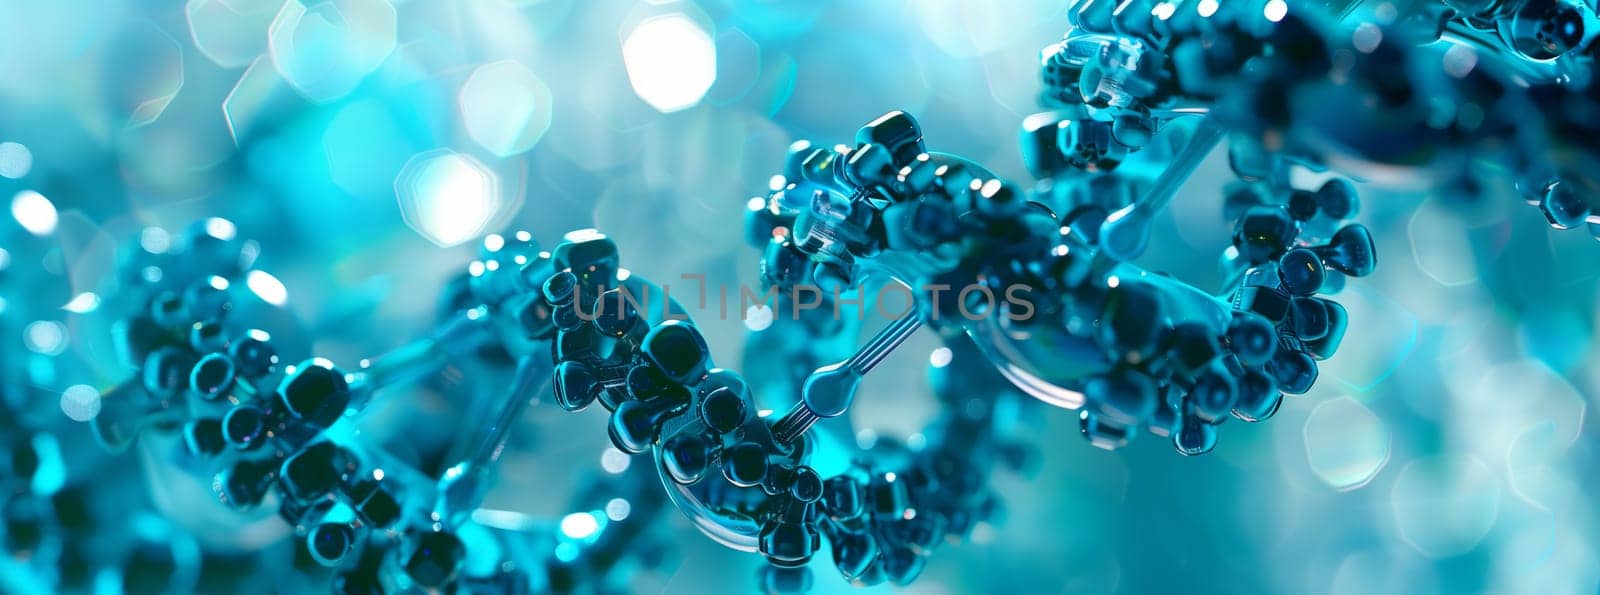 Aqua rhinestone necklace on blue background in stunning macro photography by richwolf